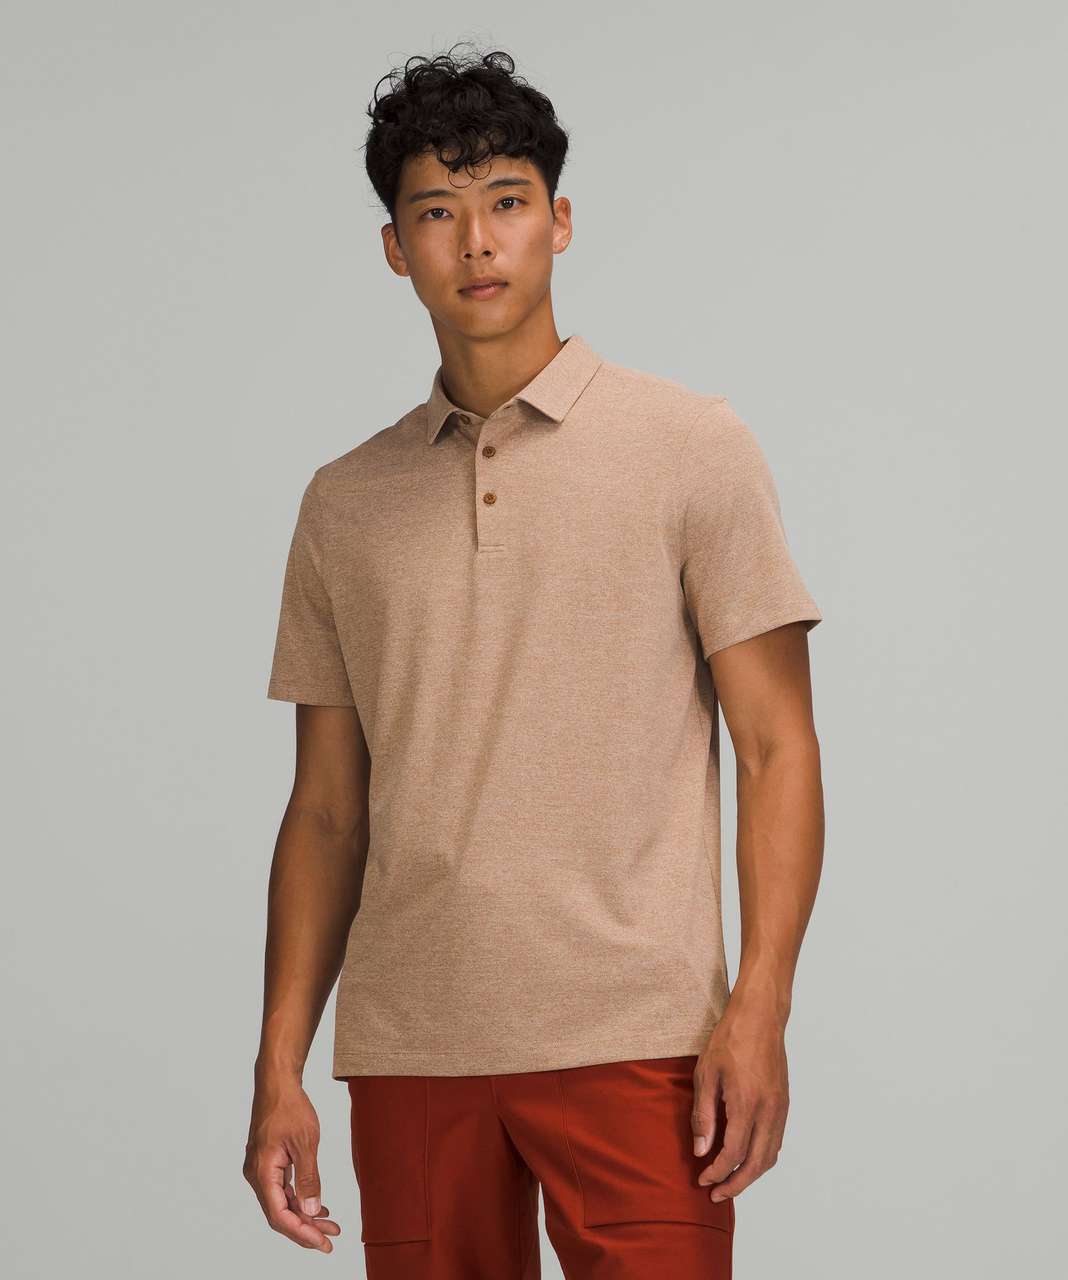 Lululemon Evolution Short Sleeve Polo Shirt - Heathered Copper Brown